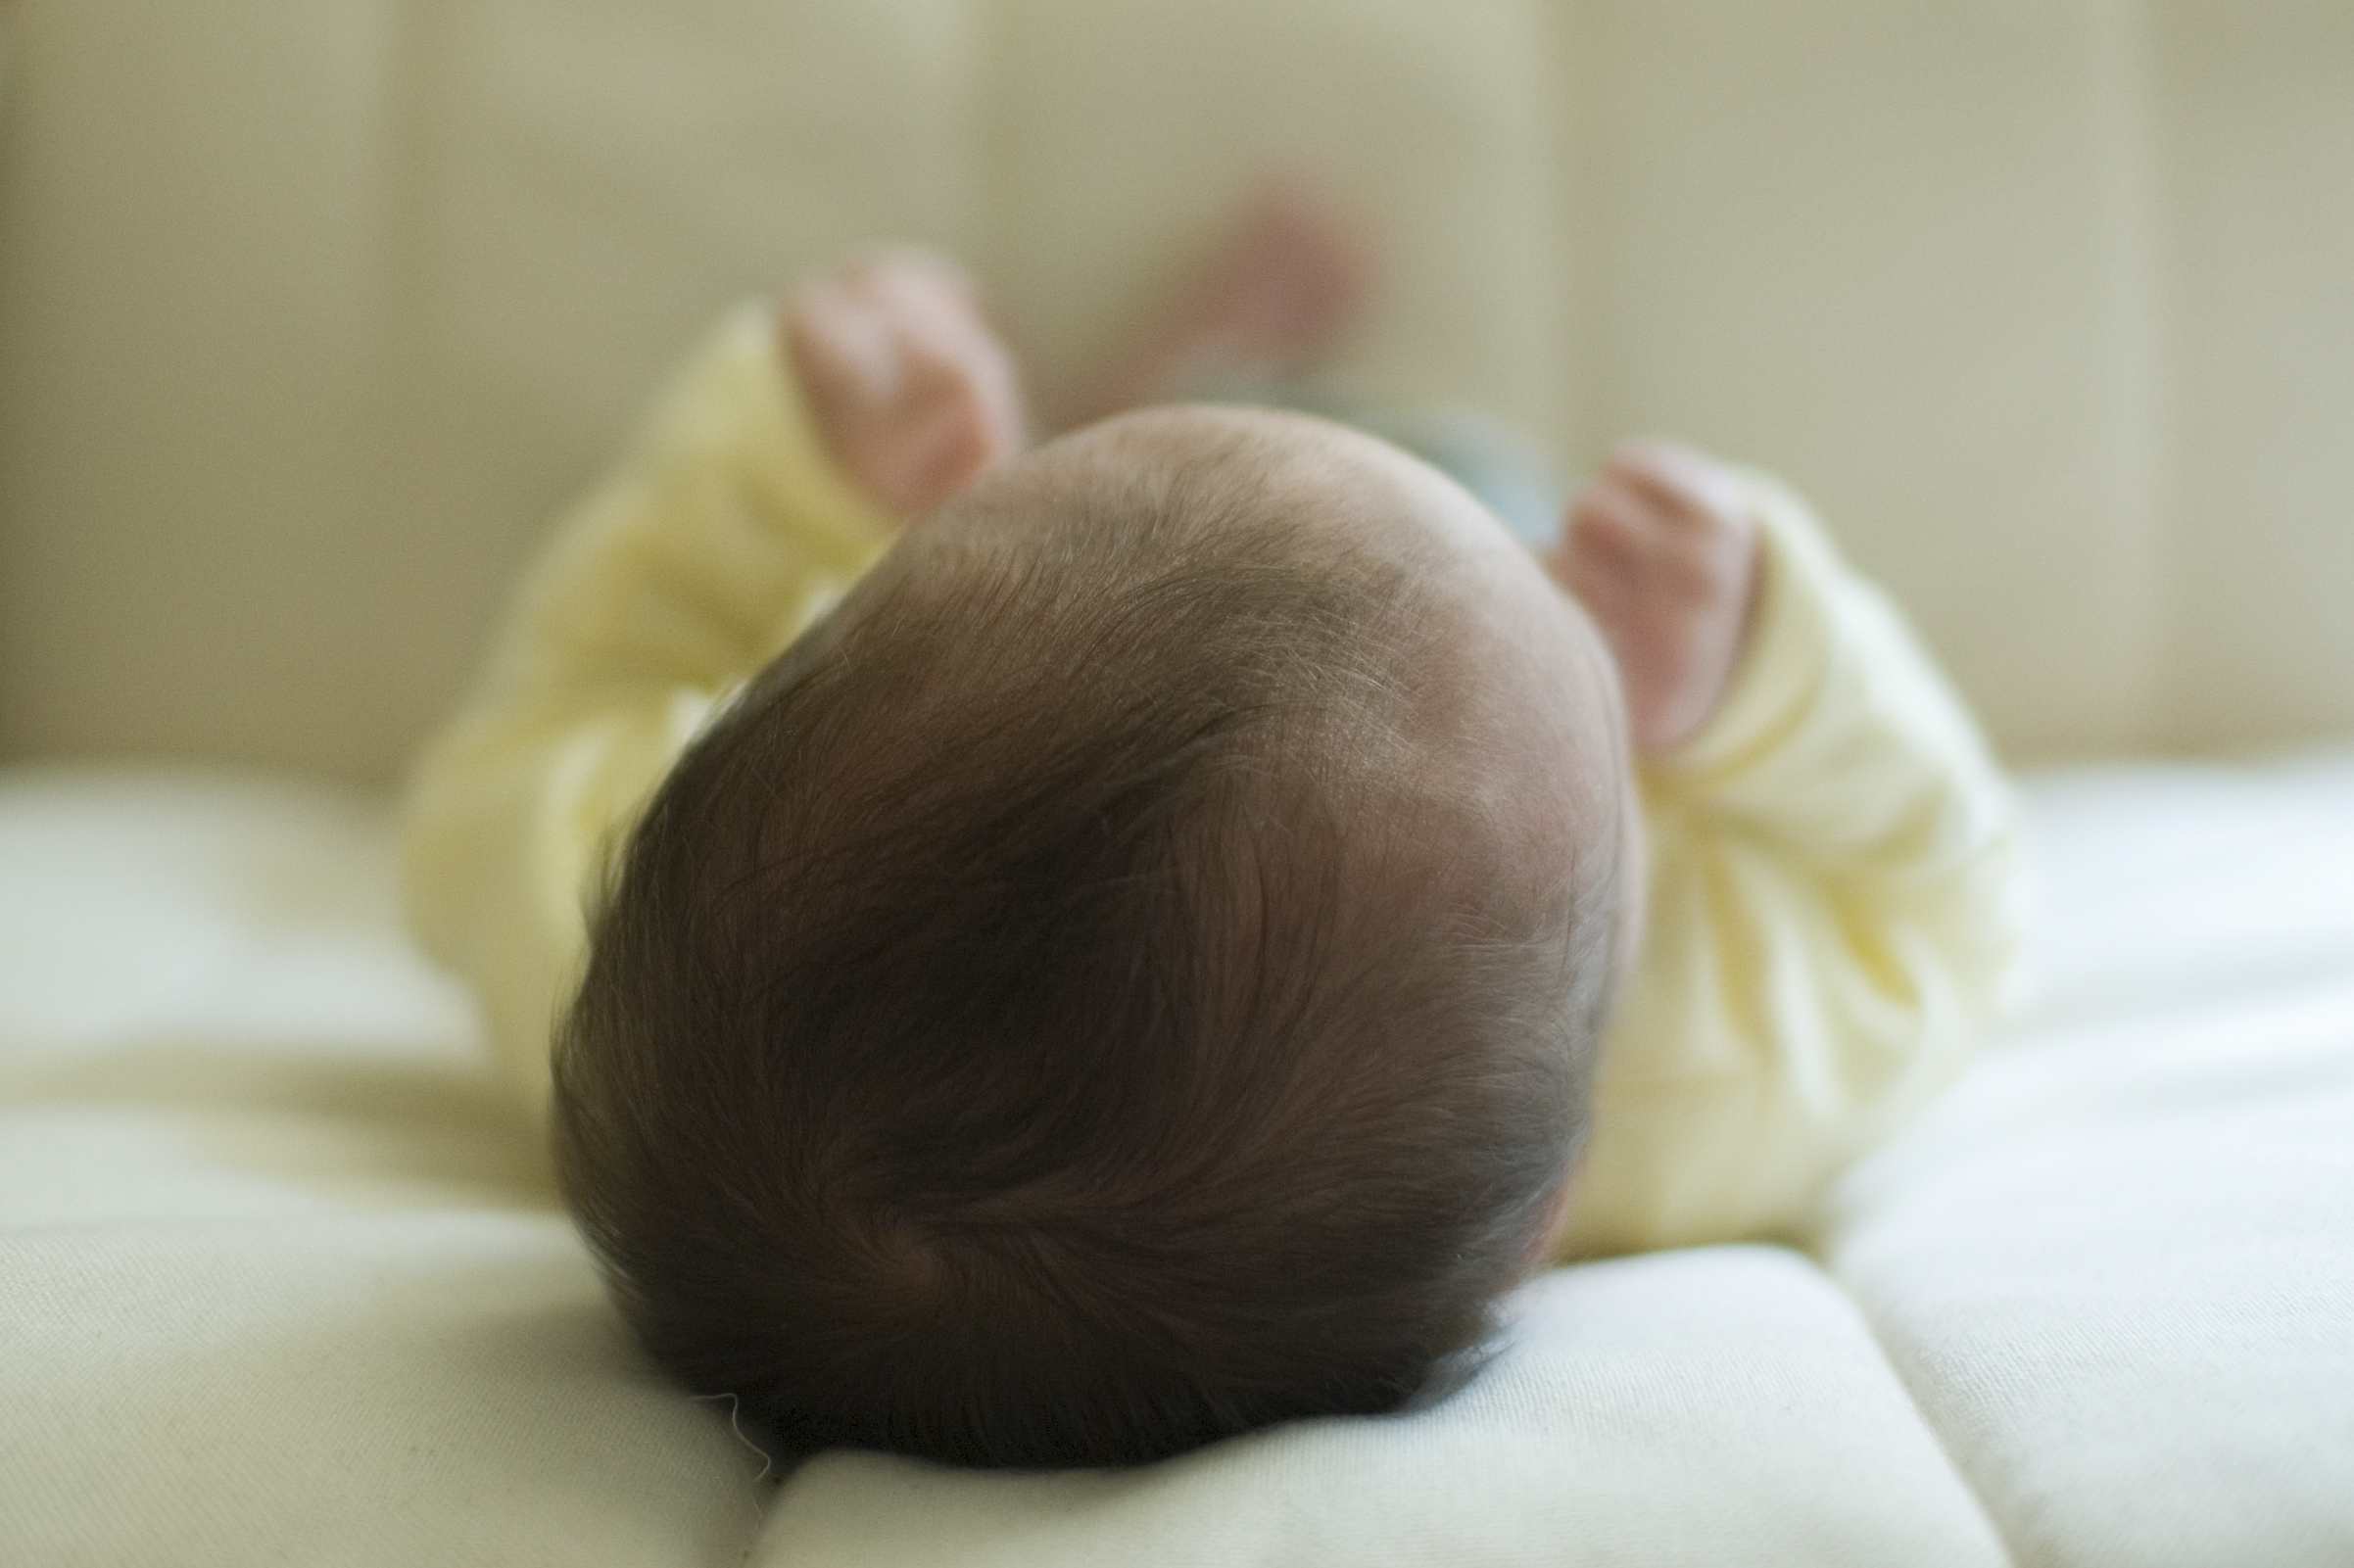 File:Sleeping baby in crib.jpg - Wikimedia Commons